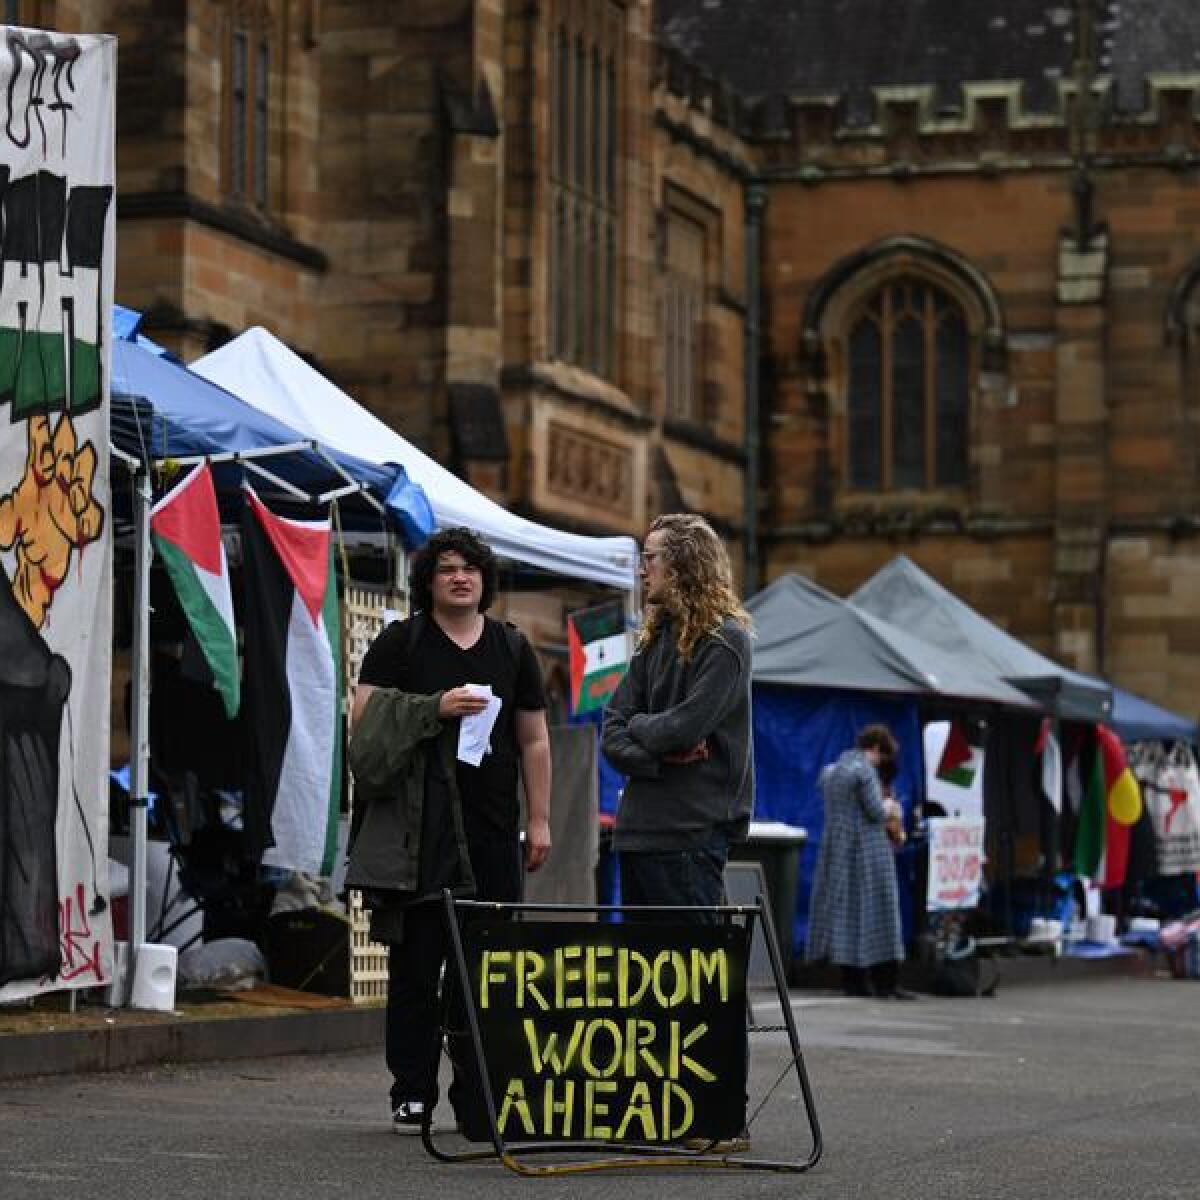 The Pro-Palestine encampment at the University of Sydney